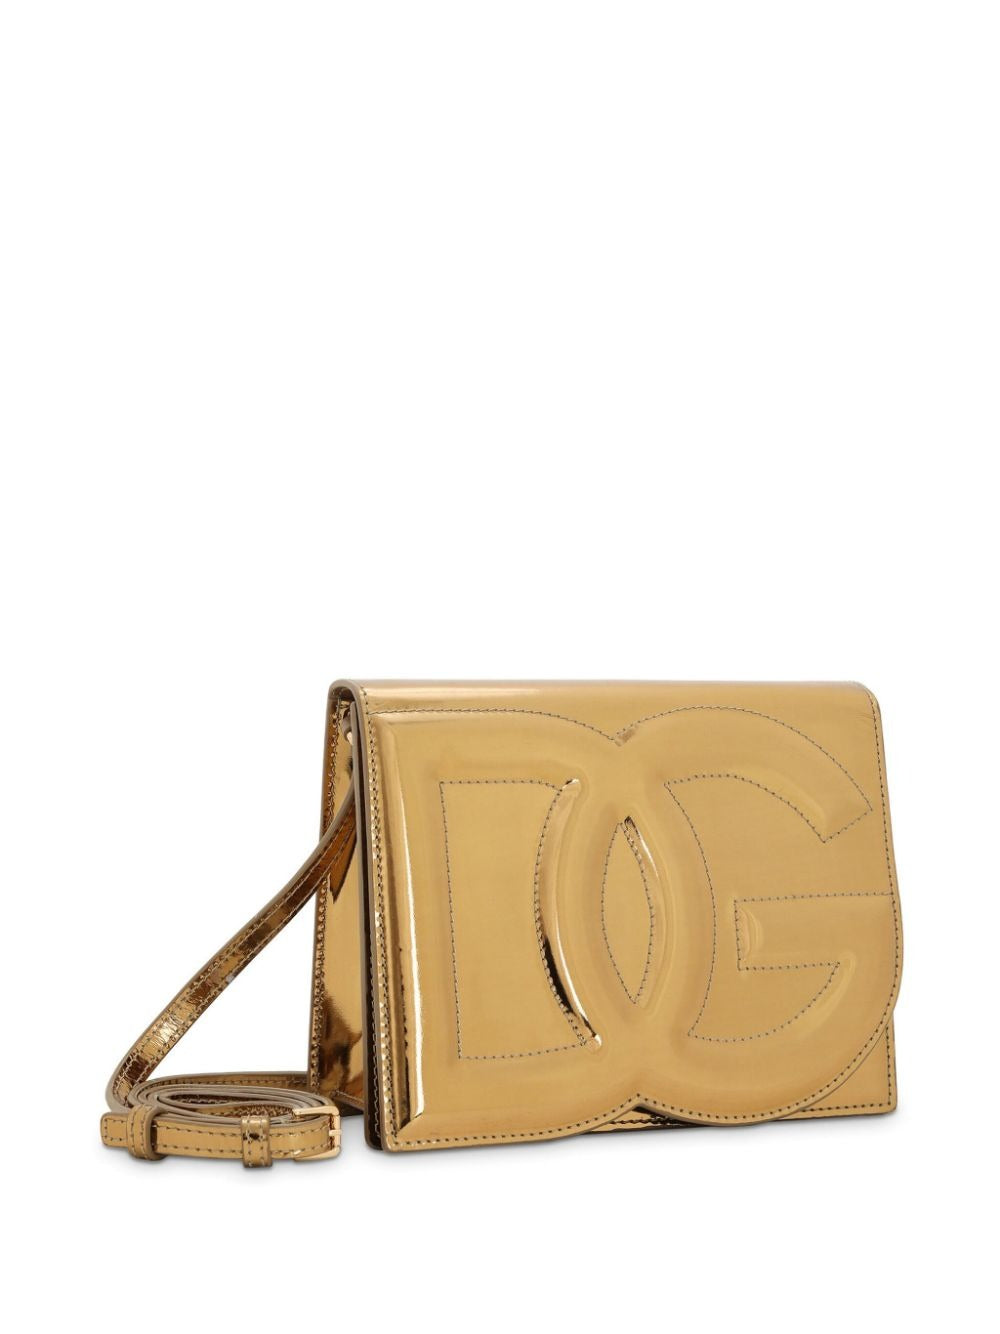 Dolce & Gabbana Light Gold Handbag